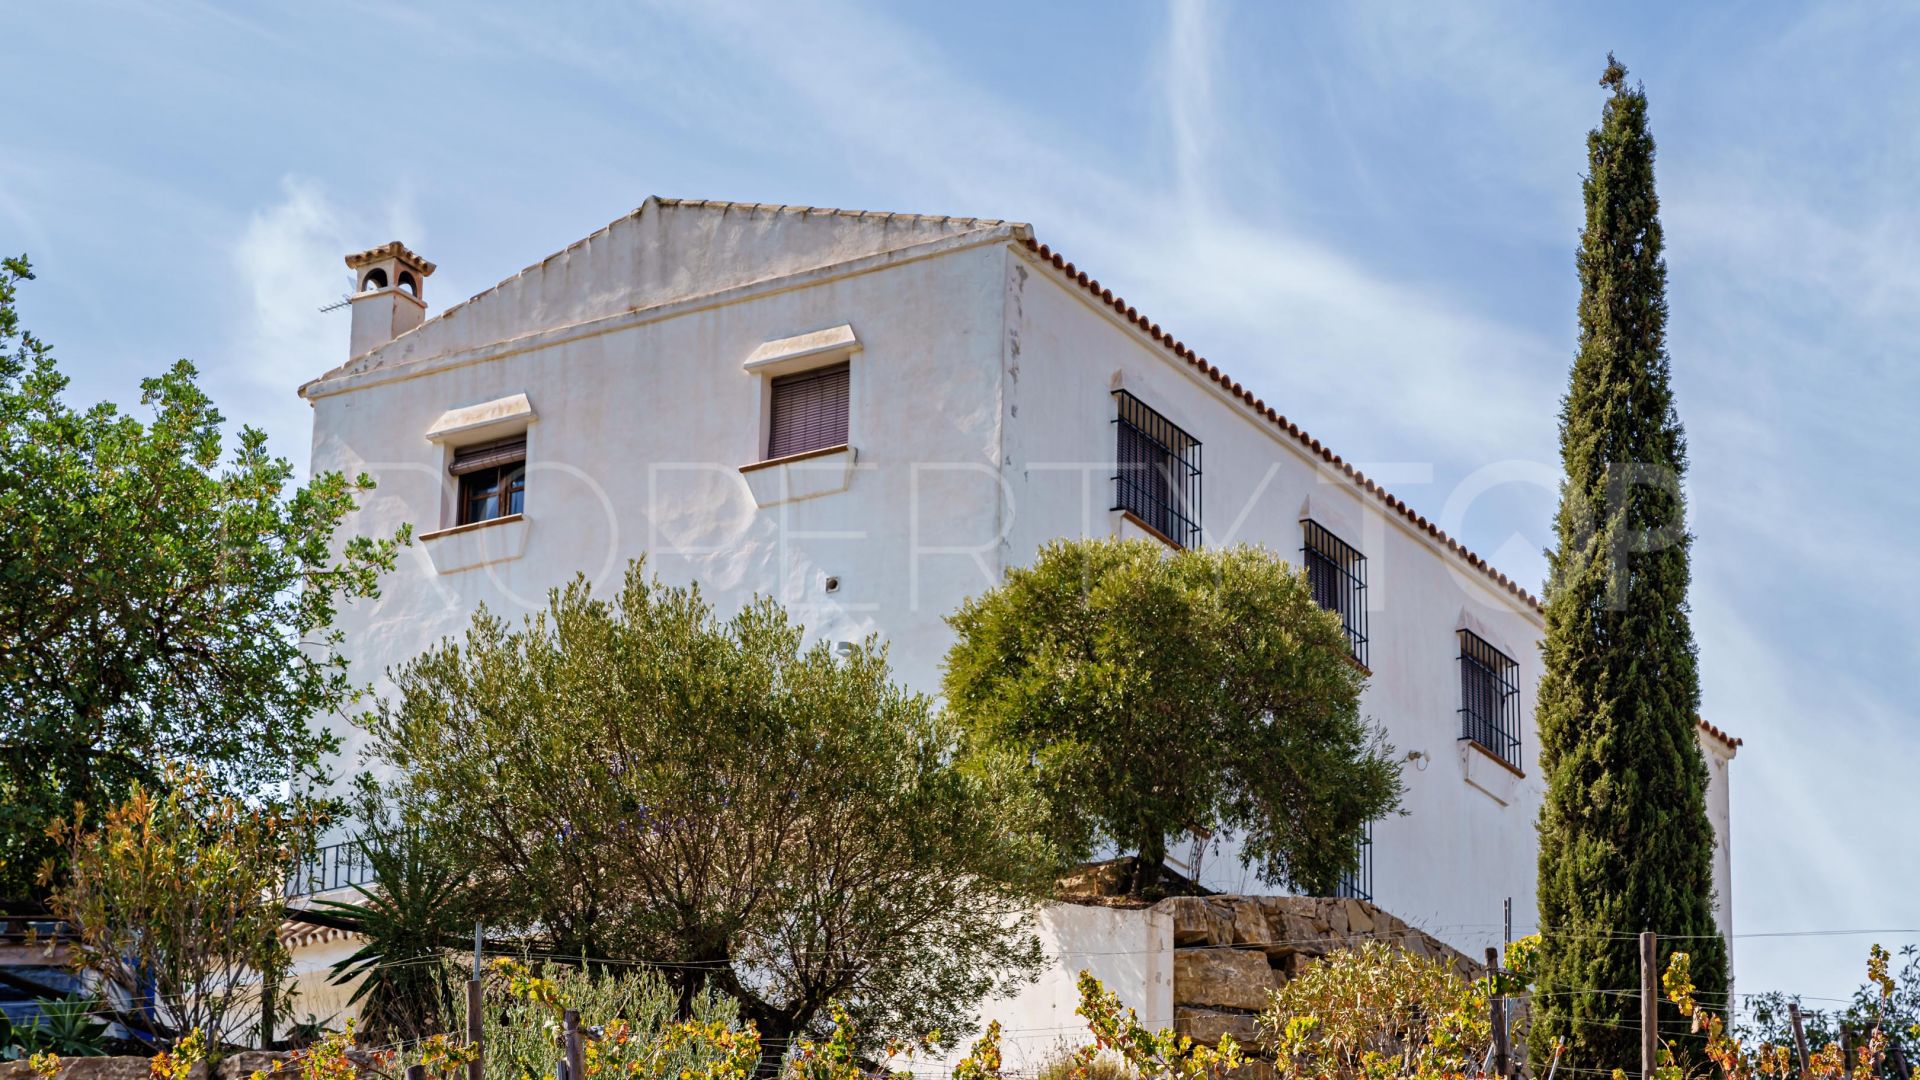 Se vende duplex de 2 dormitorios en Malaga